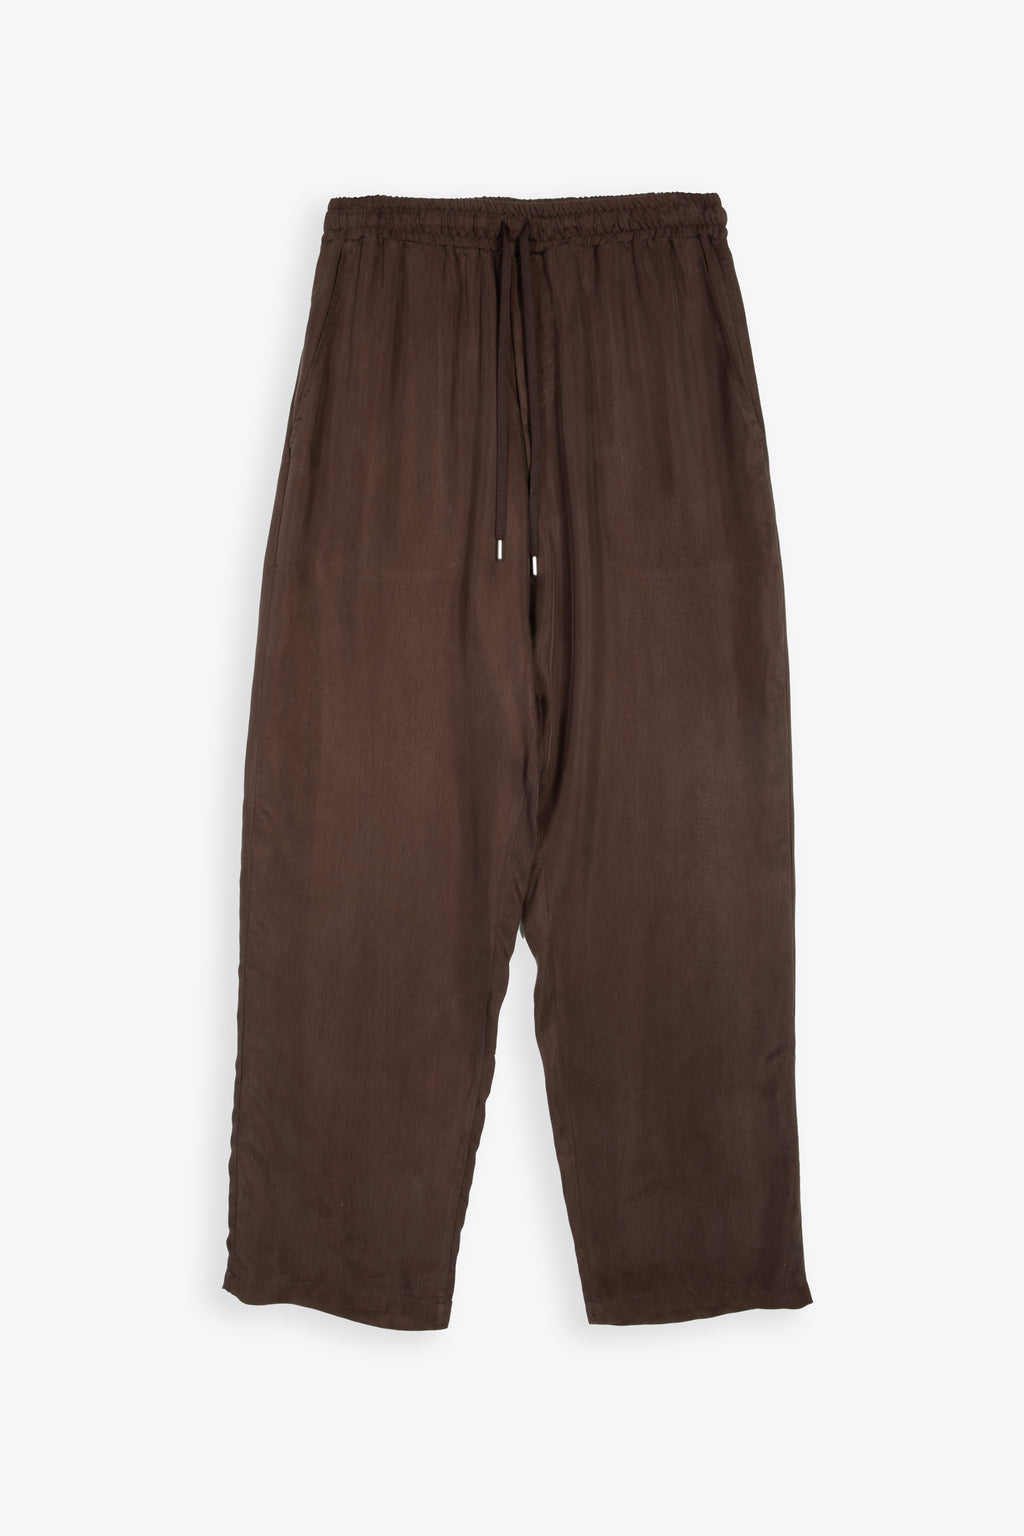 alt-image__Brown-cupro-loose-fit-drawstring-pant---Pajama-Otaru-Trousers-